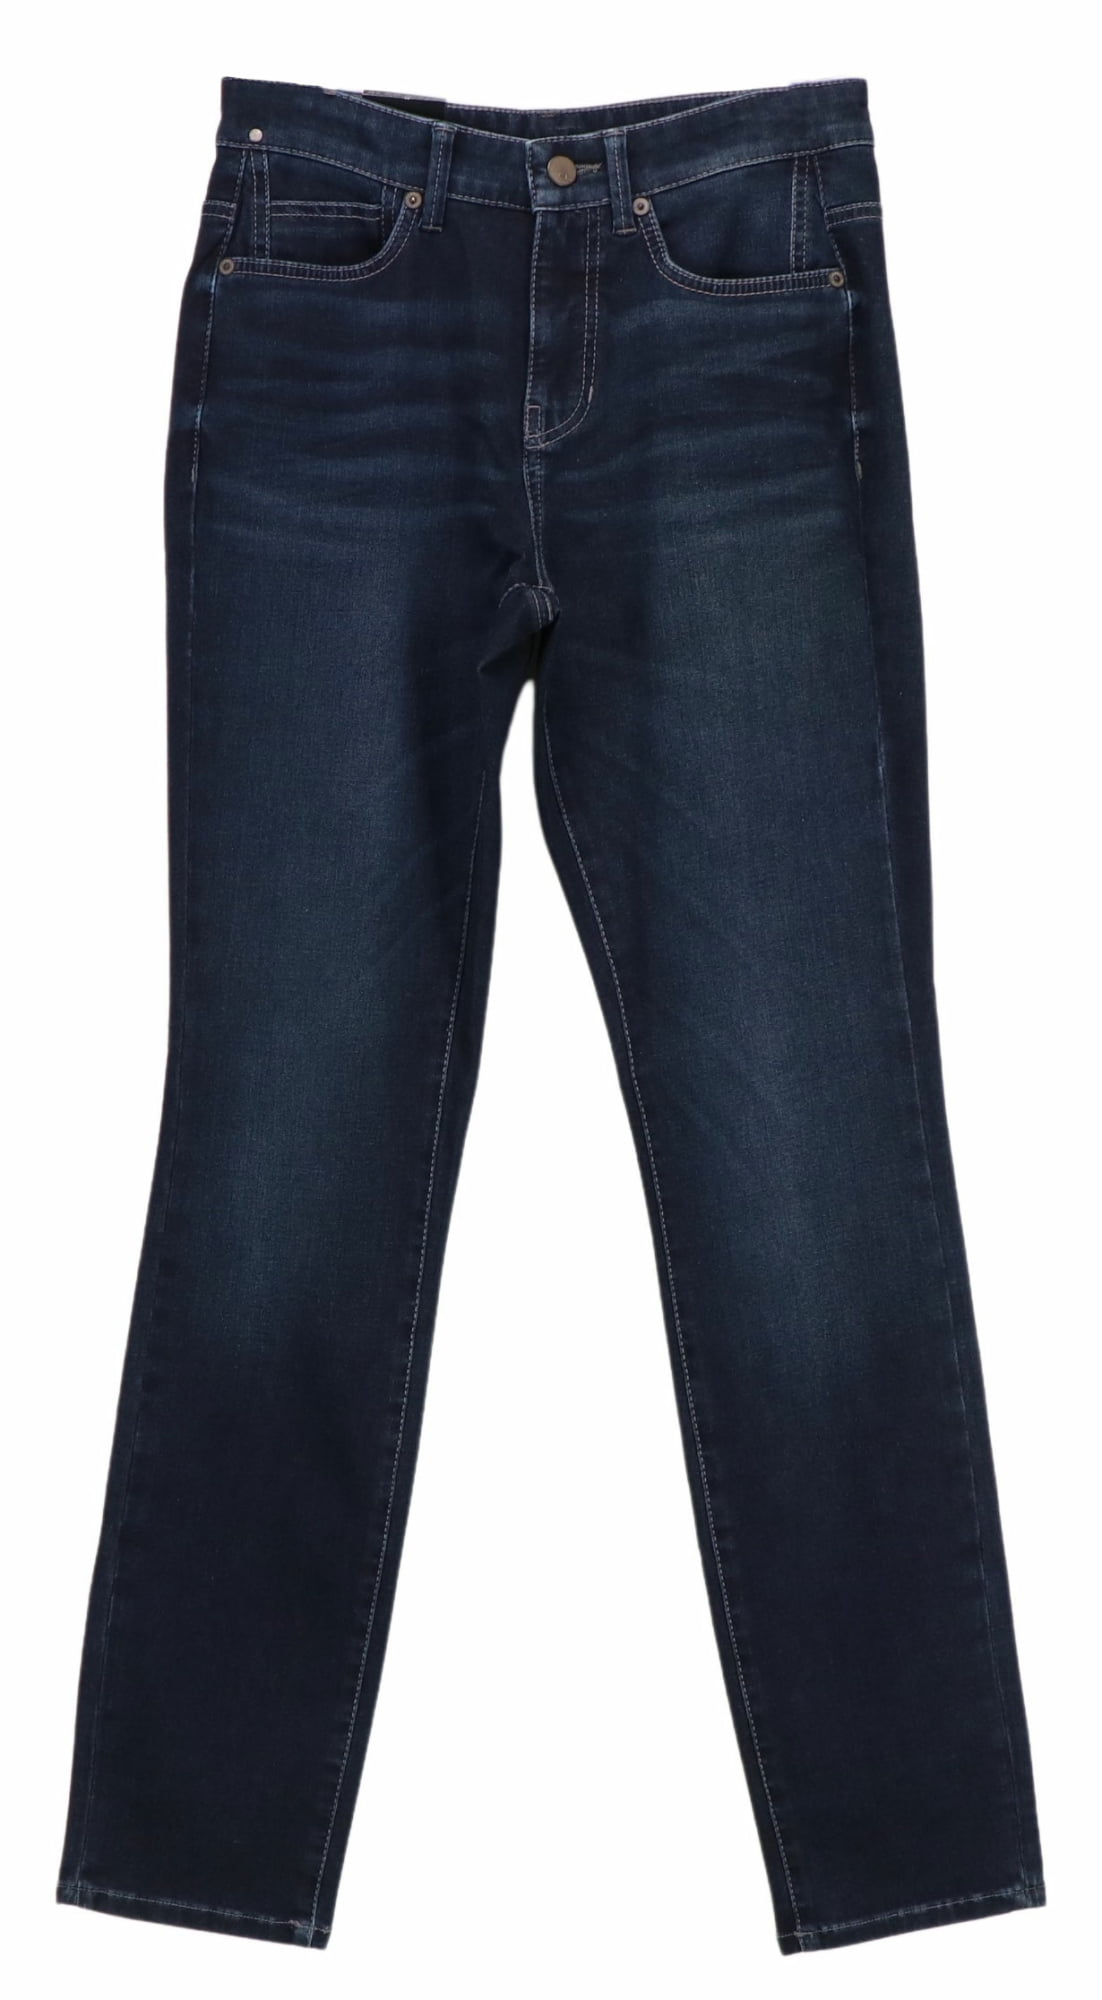 Cambio Men's Denim Jenice High Rise Jeans Jean - 36 